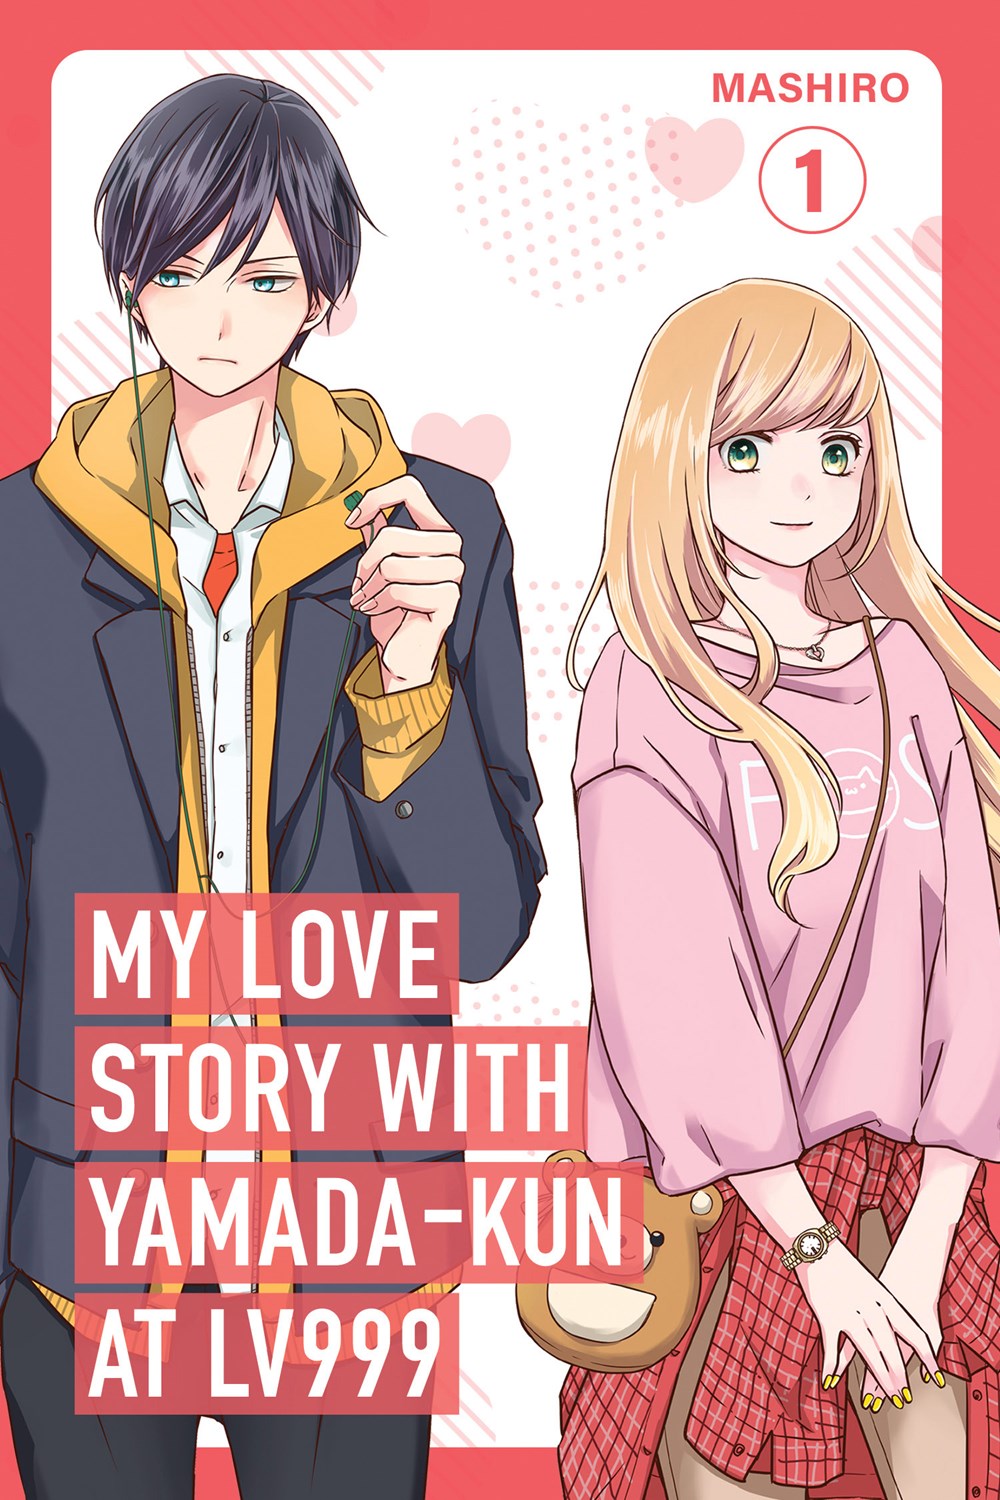 My Love Story with Yamada-kun at Lv999 Volume 1 by Mashiro